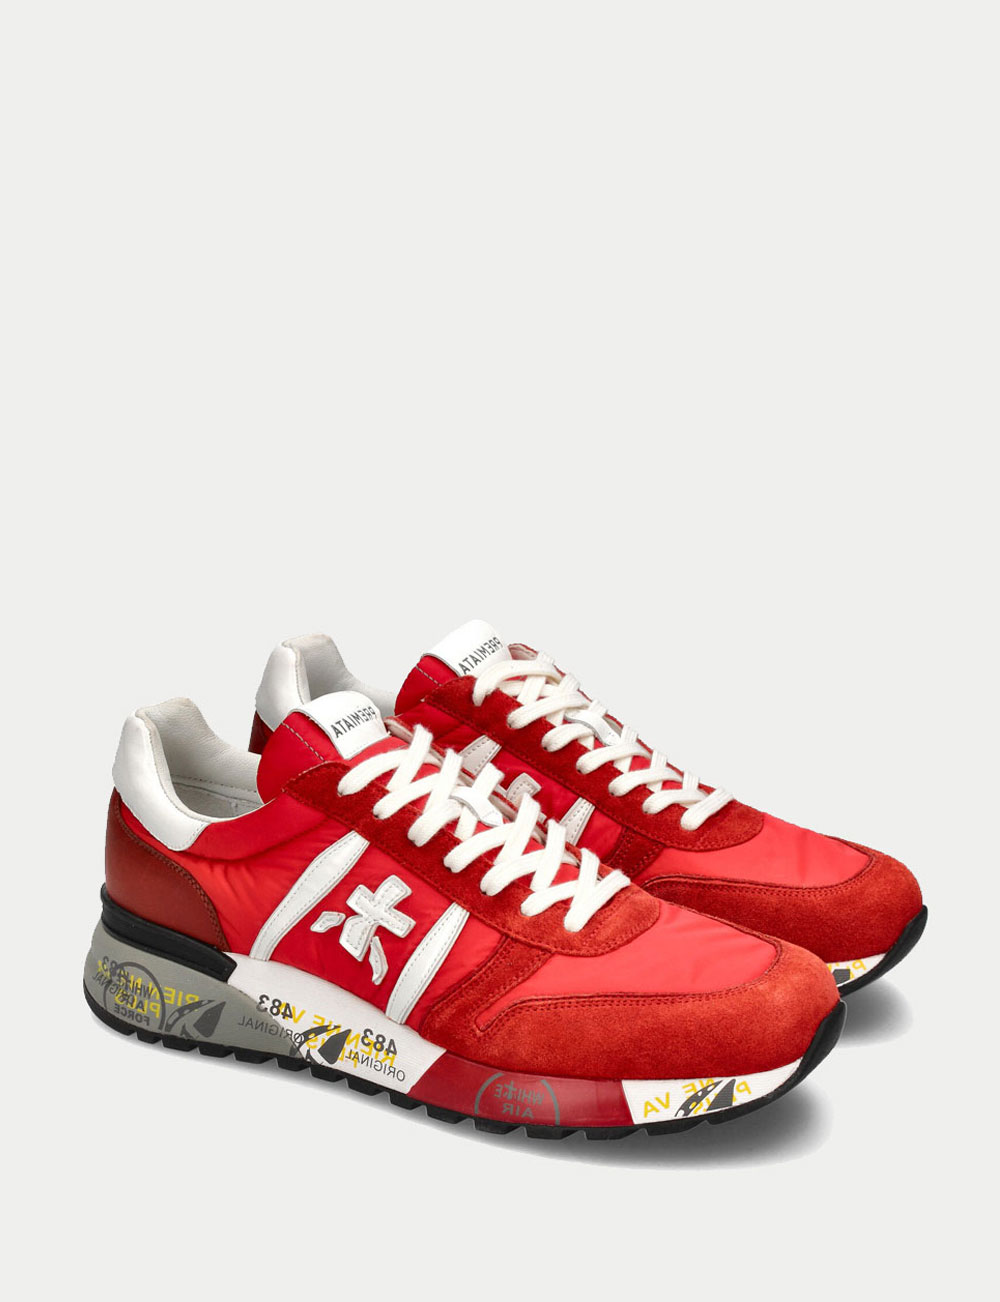 Chaussures printemps 2021 Sneakers Lander rouge homme Premiata